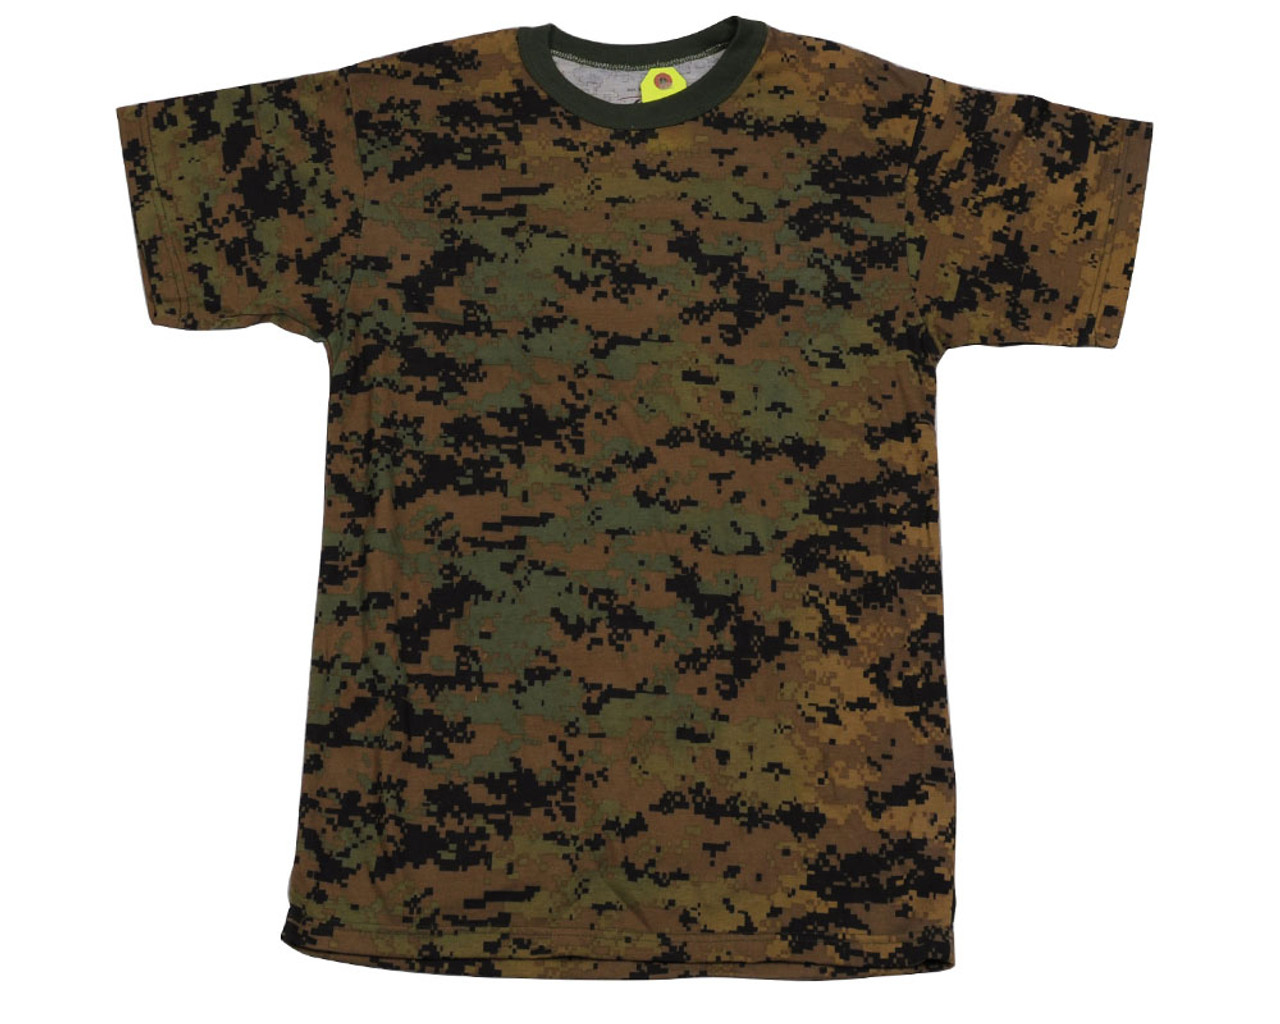 Rothco Desert Digital Camo T-Shirt, Small